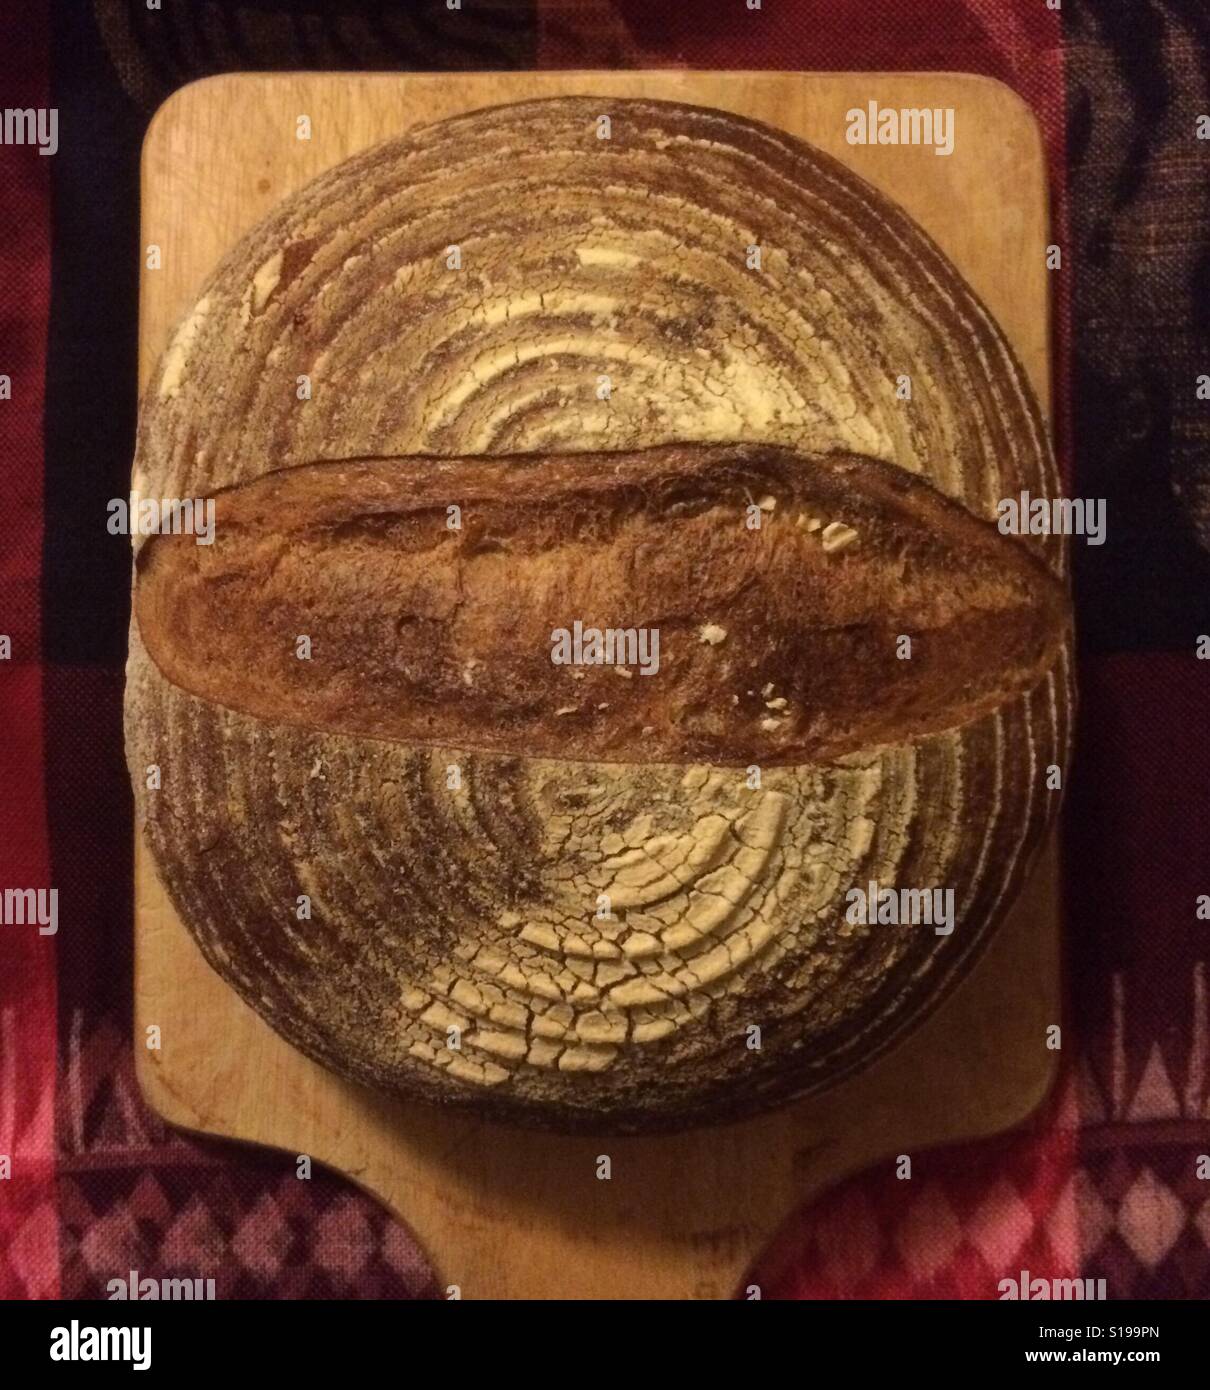 Artisanal bread loaf, detail Stock Photo